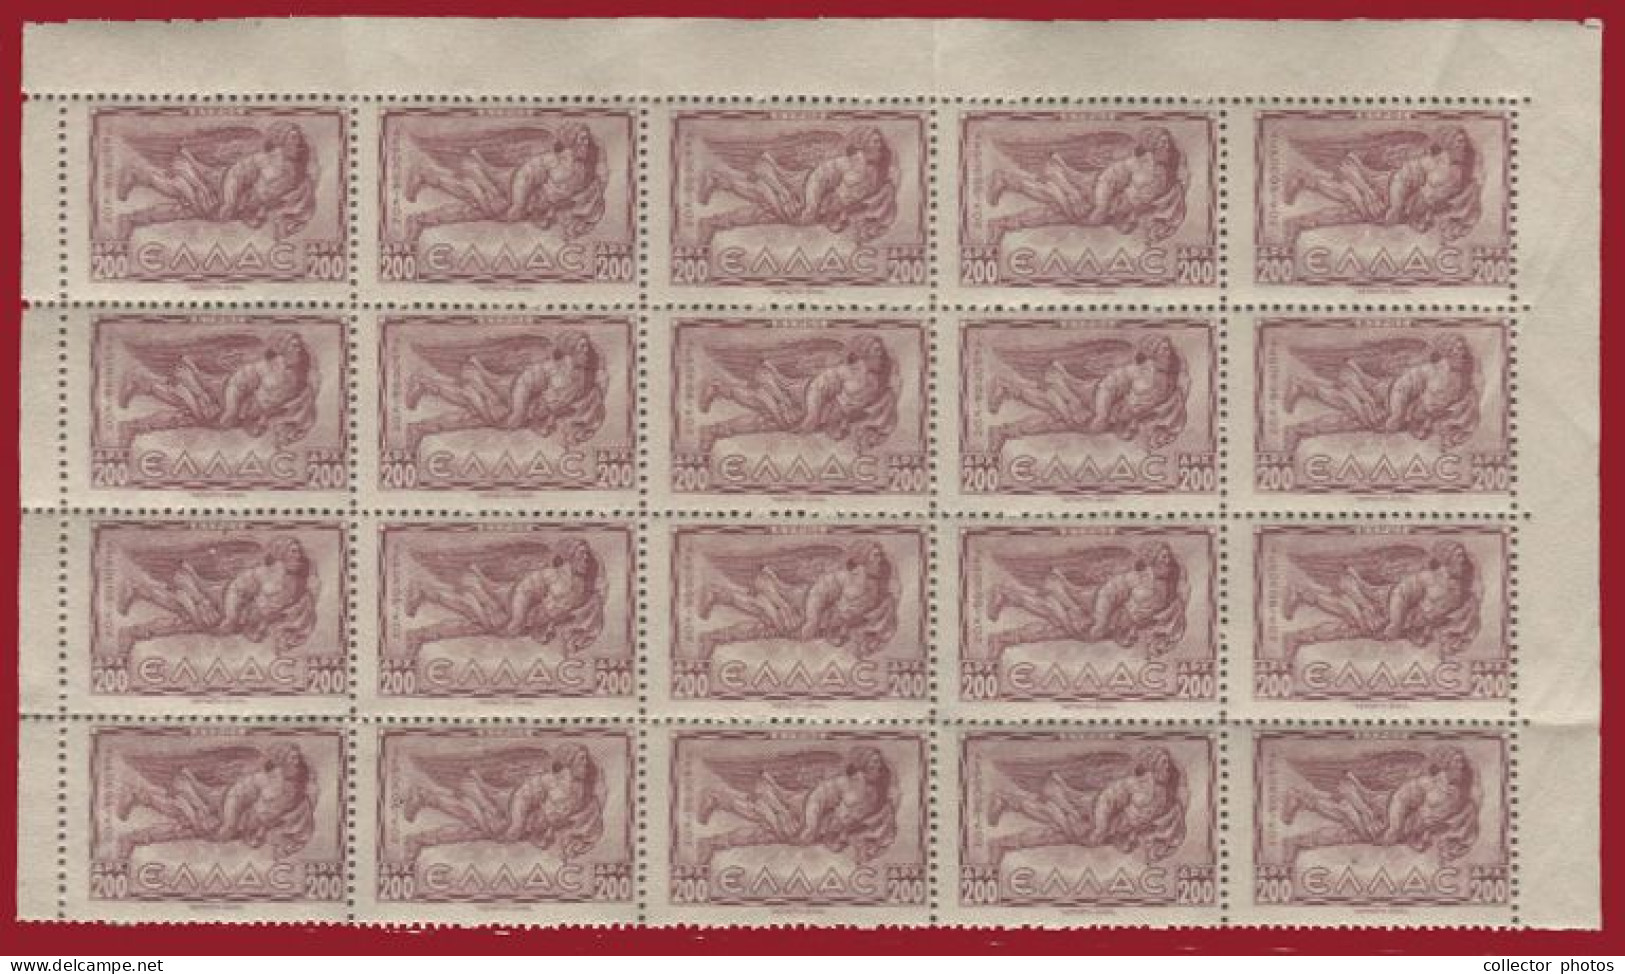 Greece 1943 [German Occupation]. 20 complette series stamps AERIDES (AΕΡΗΔΕΣ) ΜΝΗ**  [de095]